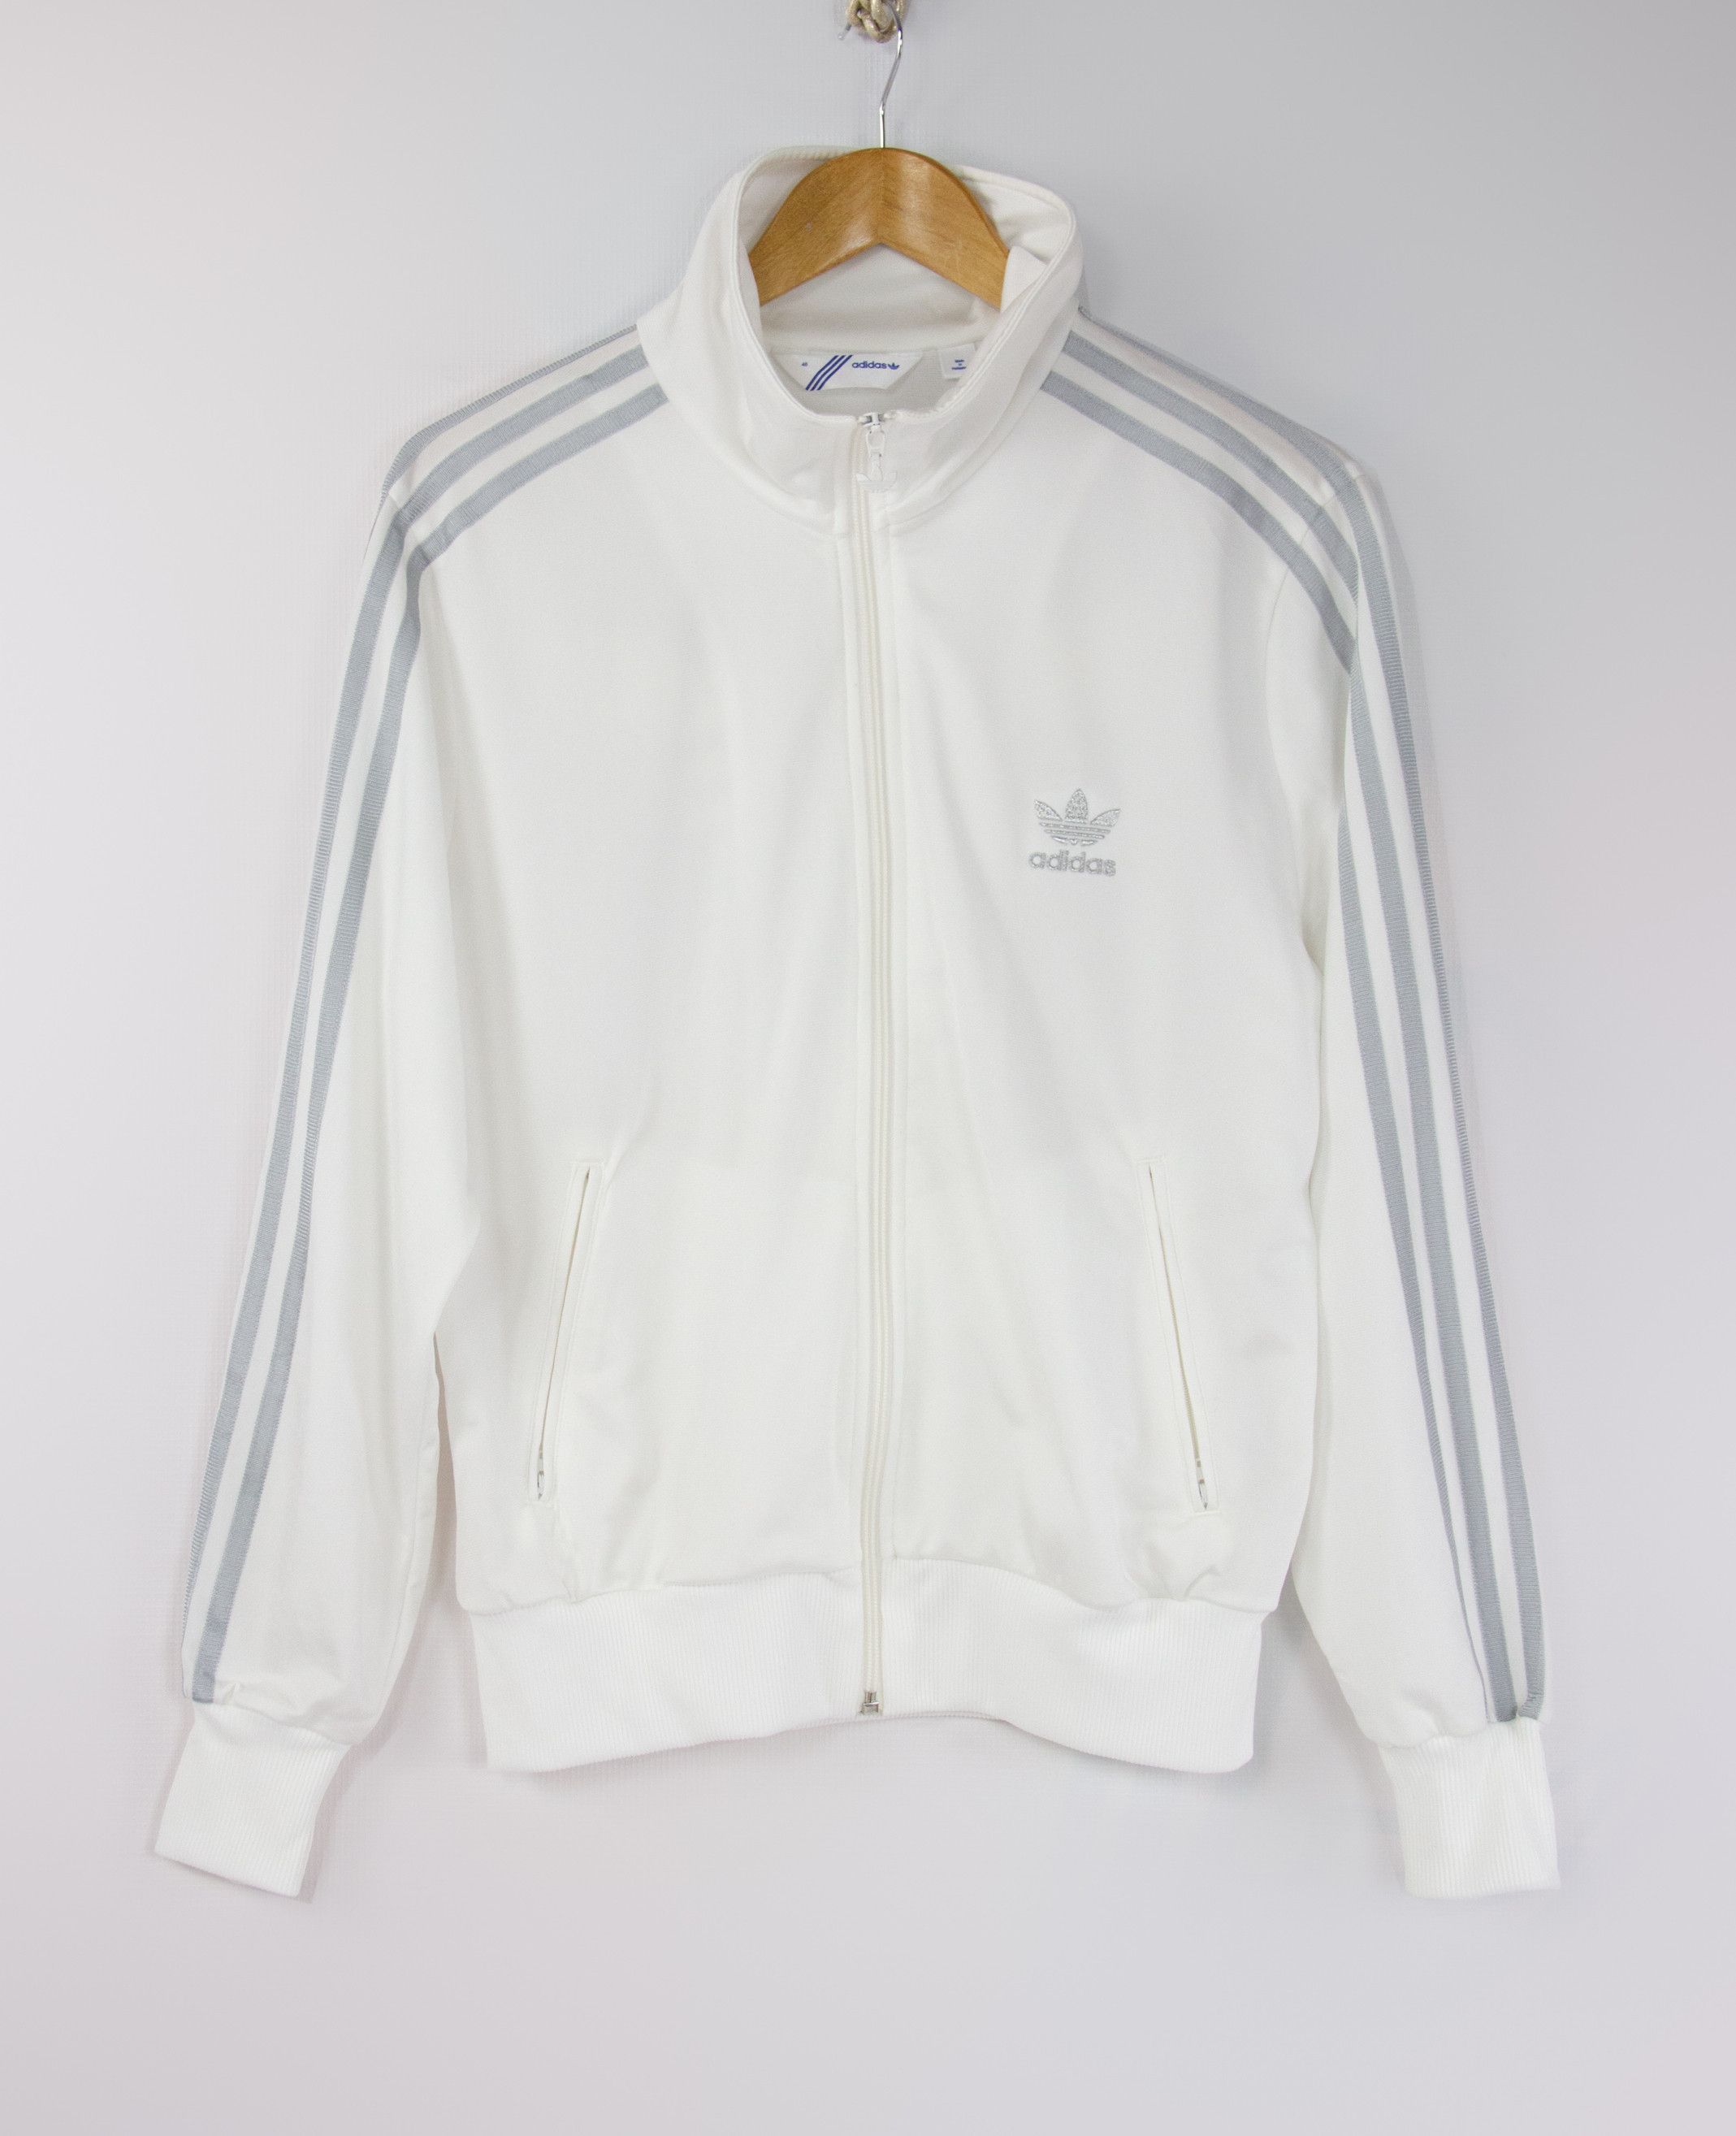 Adidas Adidas Originals White Track Jacket with Silver Stripes, Size M Size US M / EU 48-50 / 2 - 4 Thumbnail